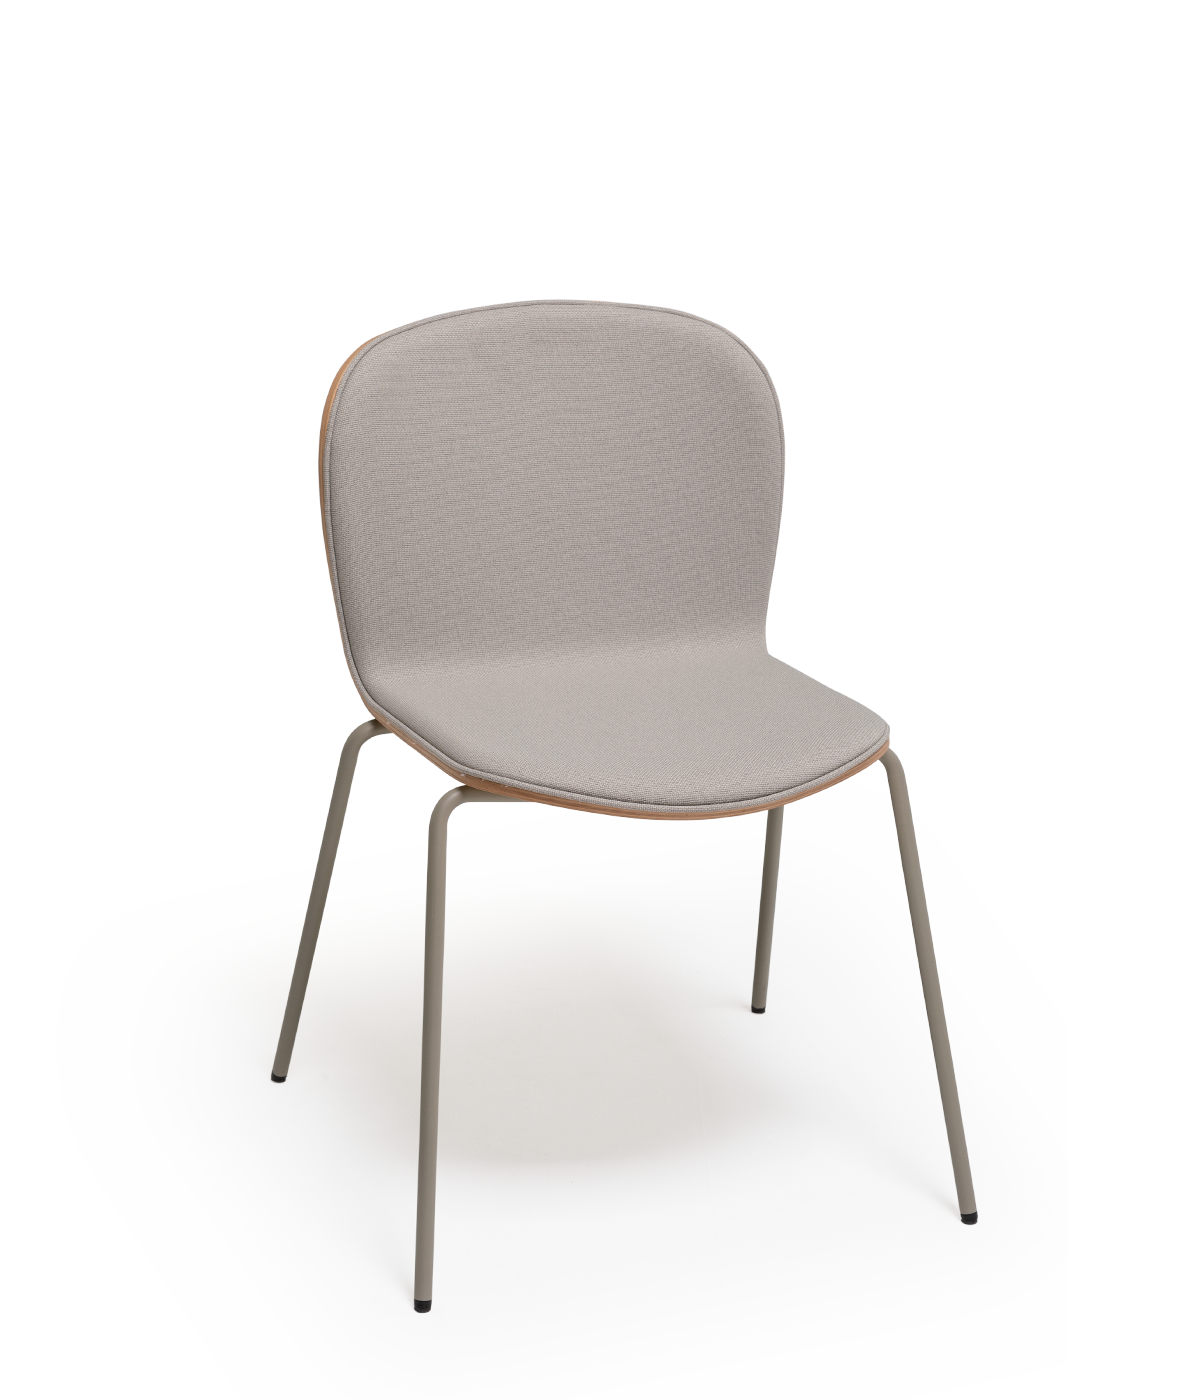 Vergés - Ona chair with metallic legs